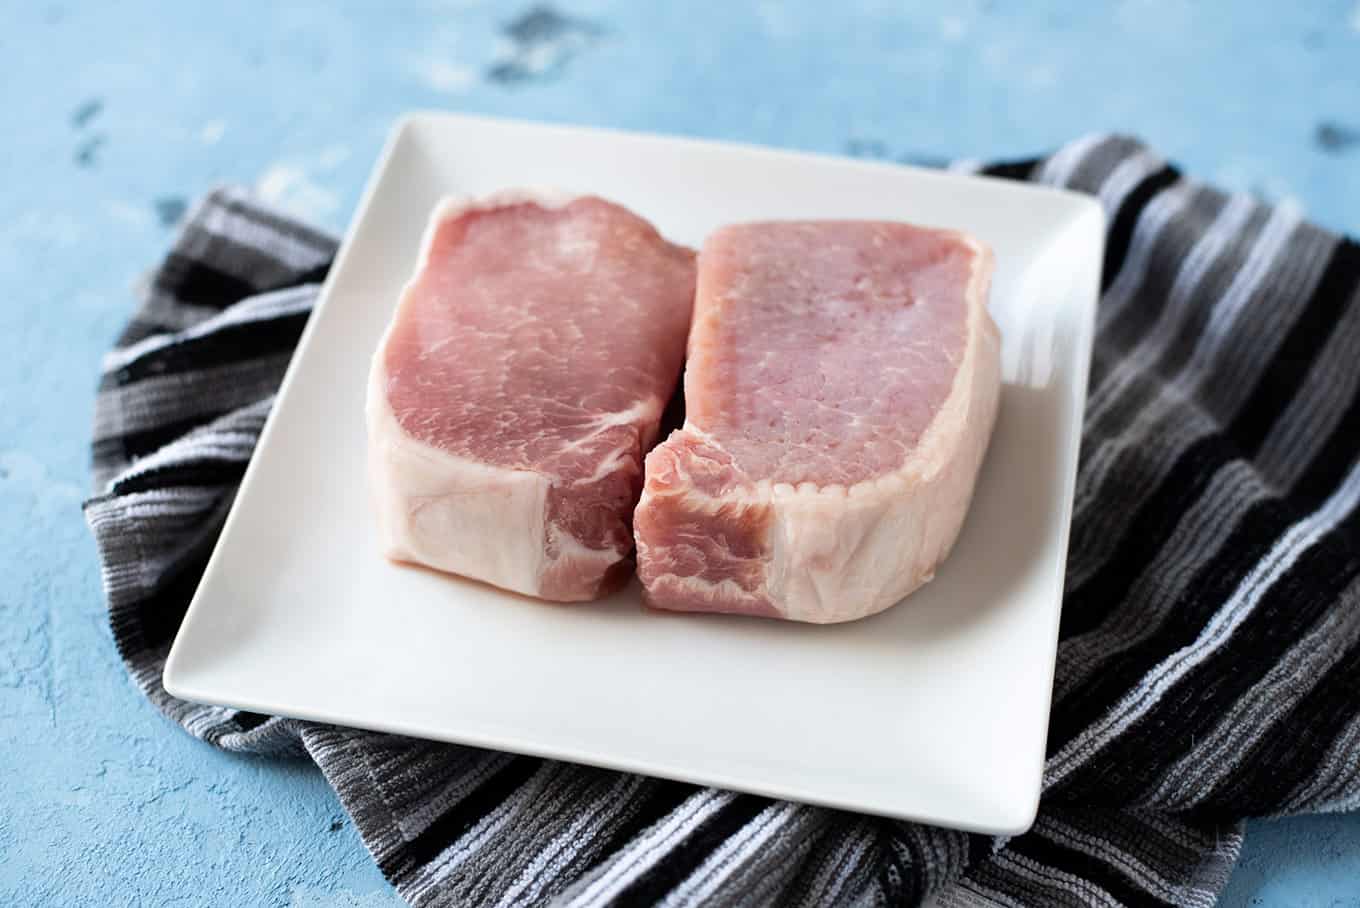 Raw pork chops on a plate.